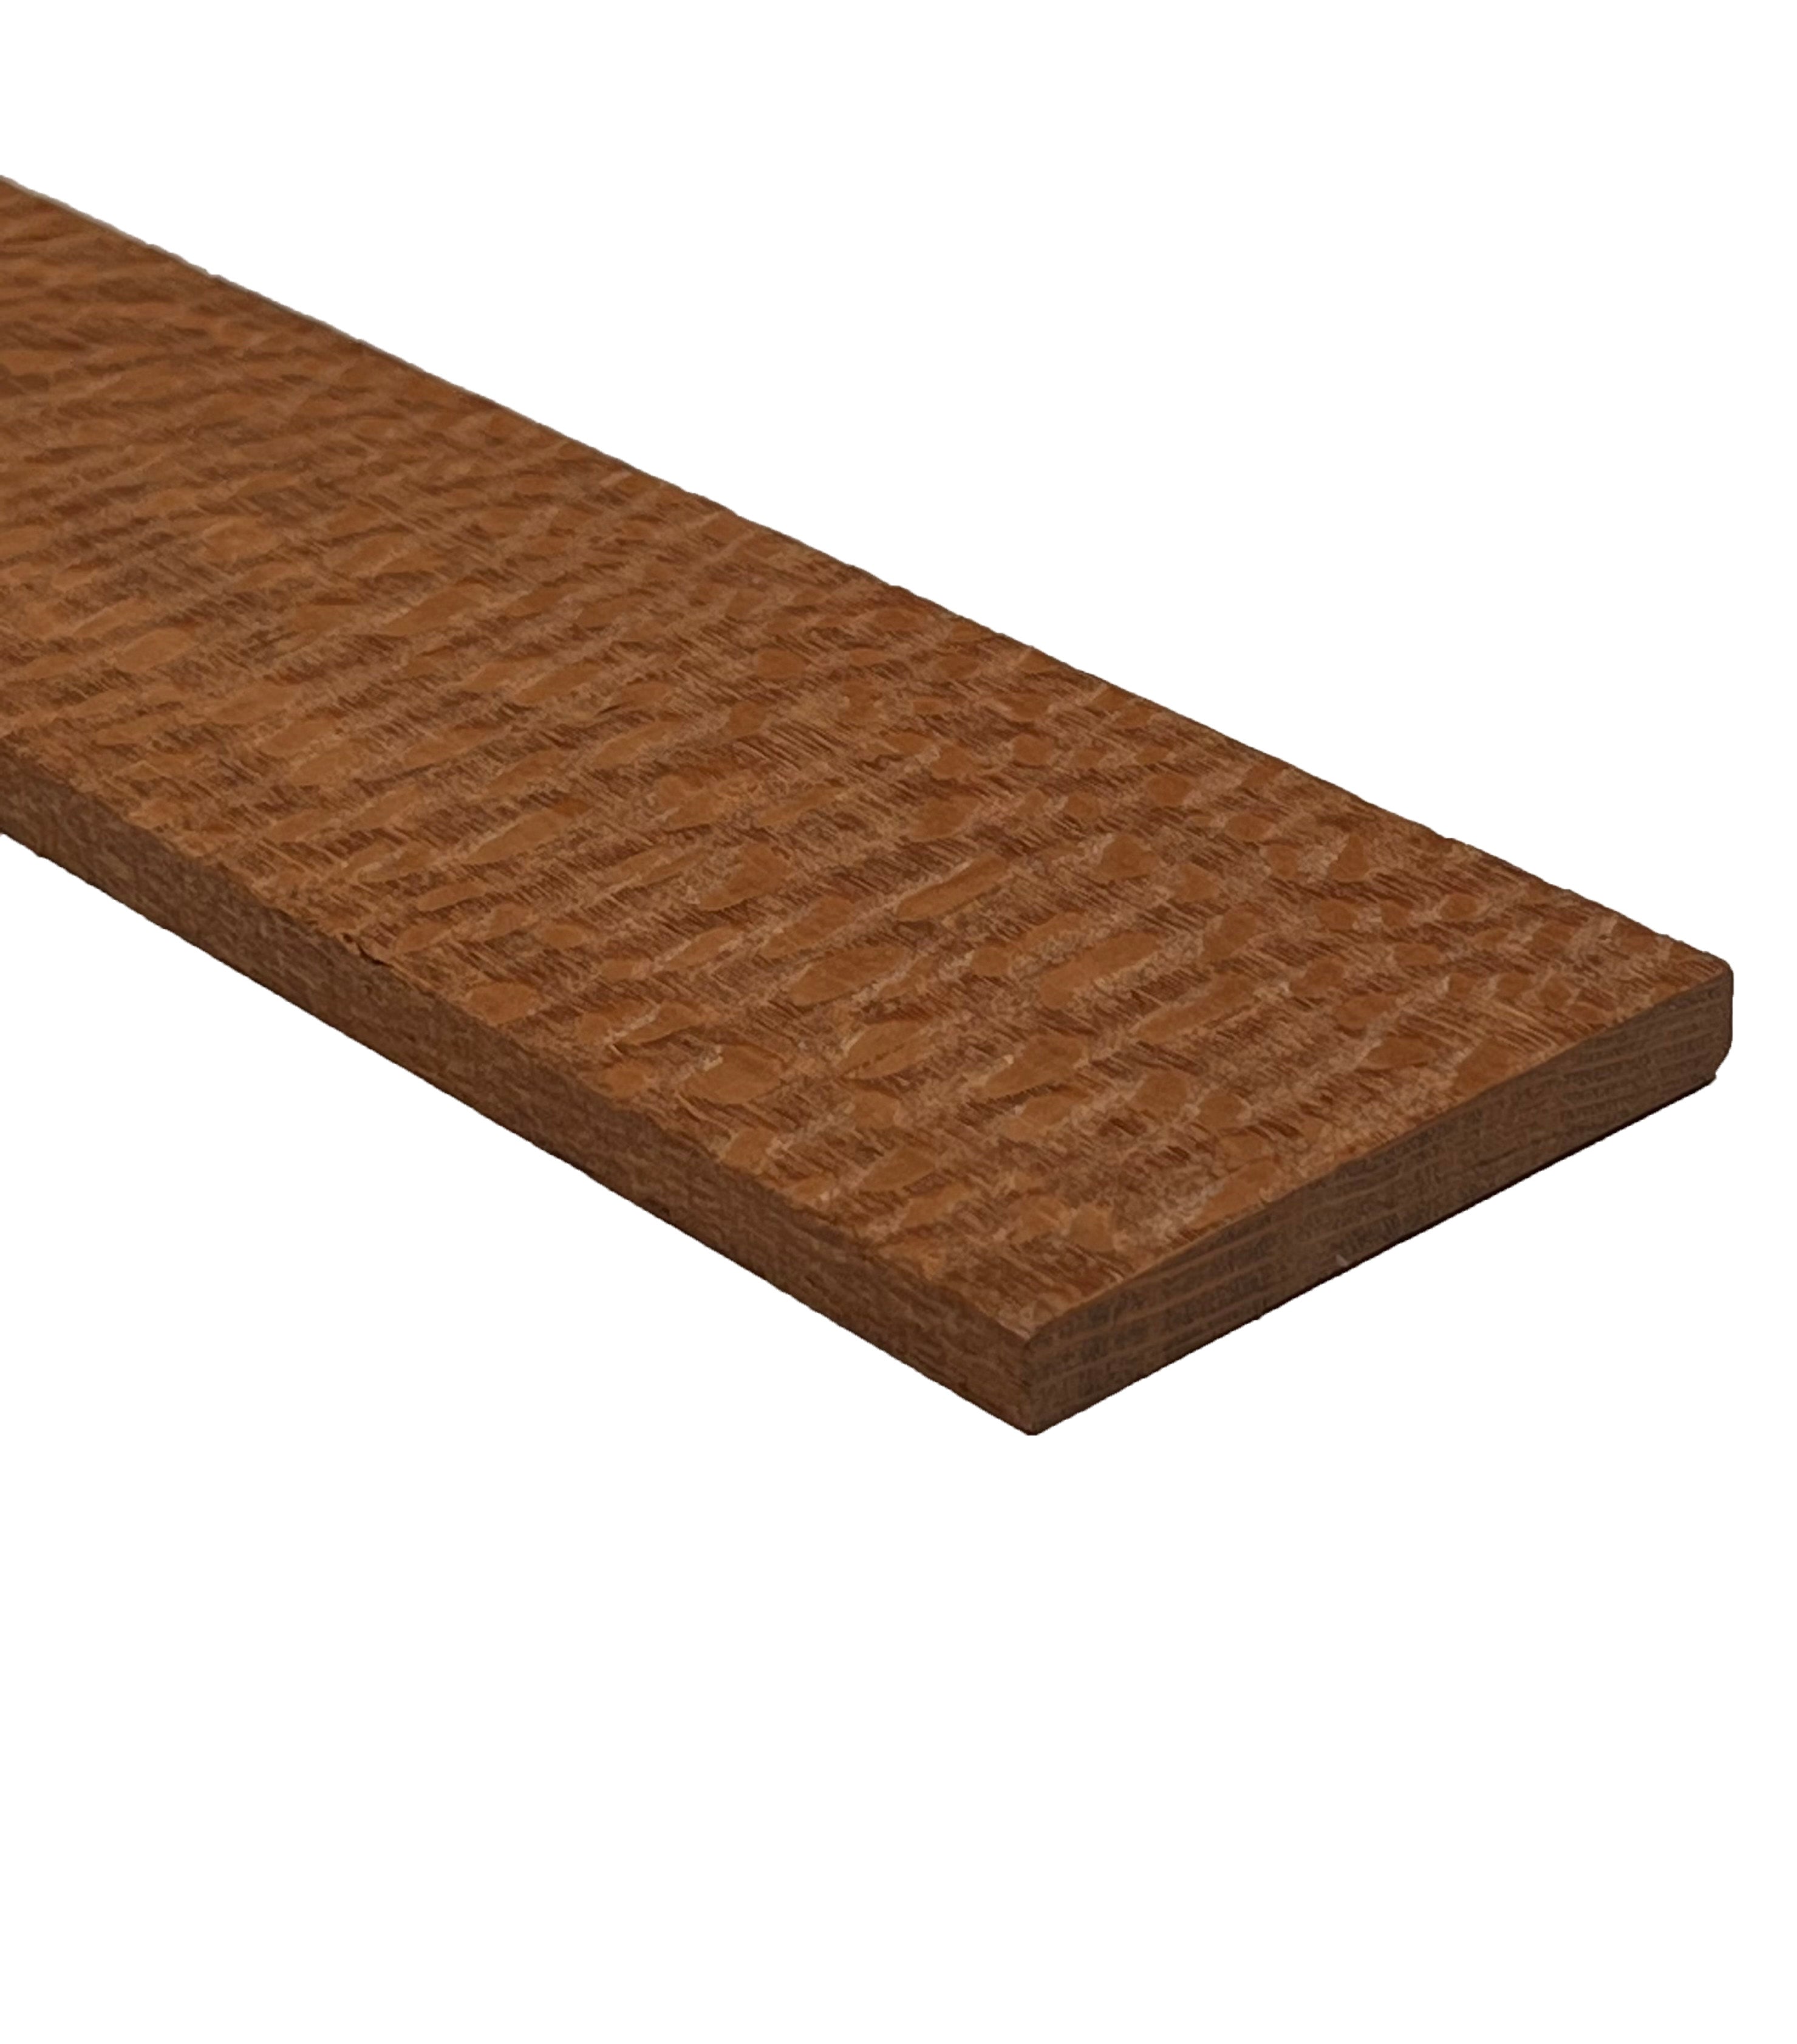 Leopardwood Thin Stock Lumber Board Wood Blank